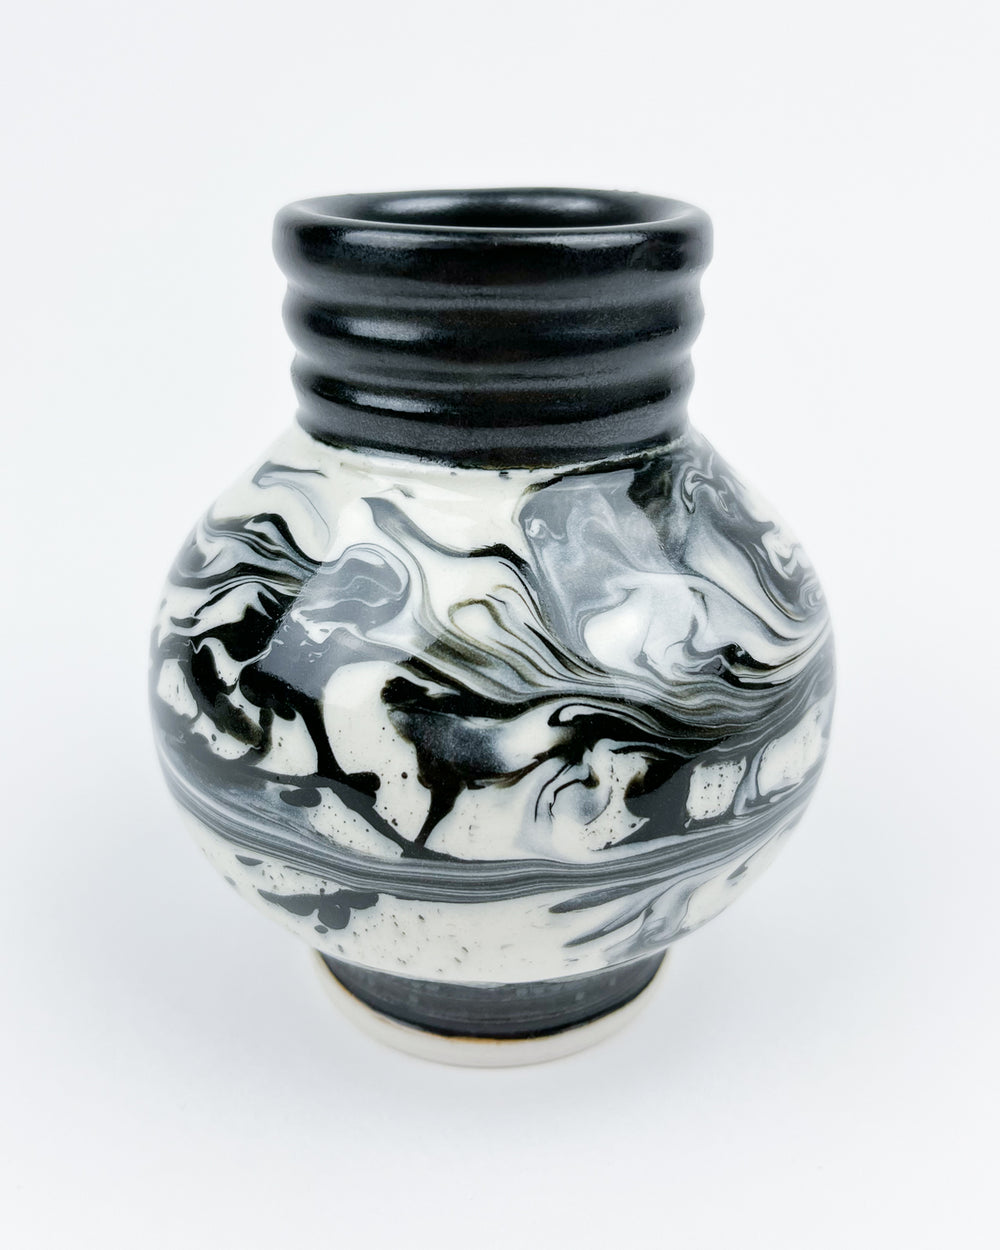 Black and White Marbleware Bottle